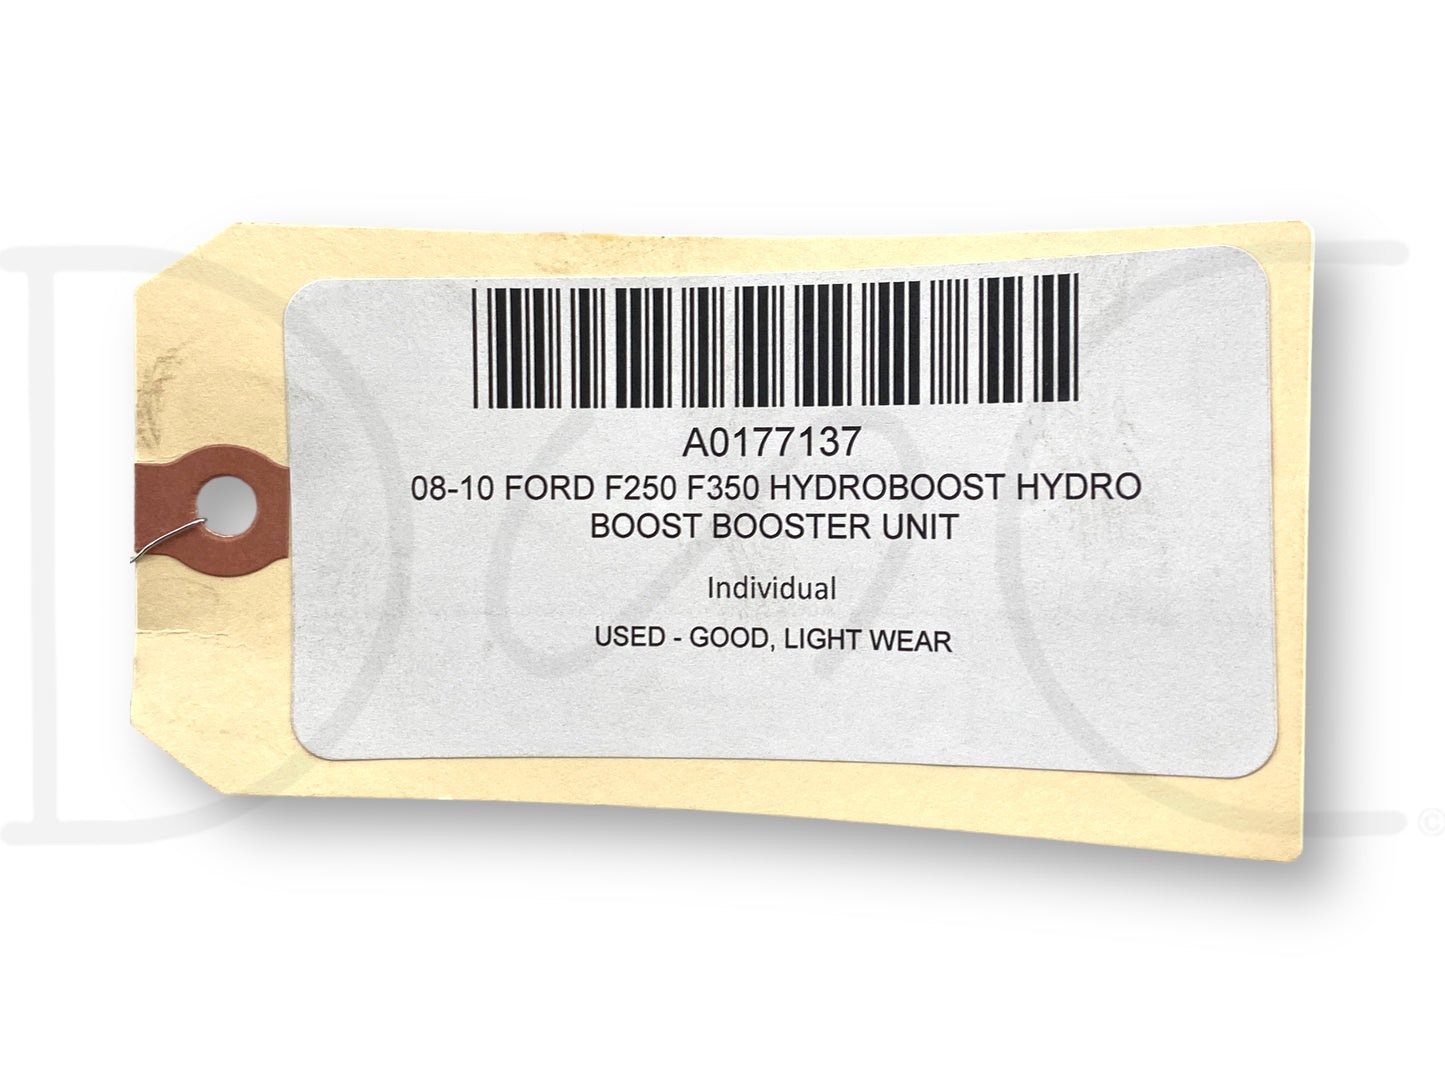 08-10 Ford F250 F350 Hydroboost Hydro Boost Booster Unit